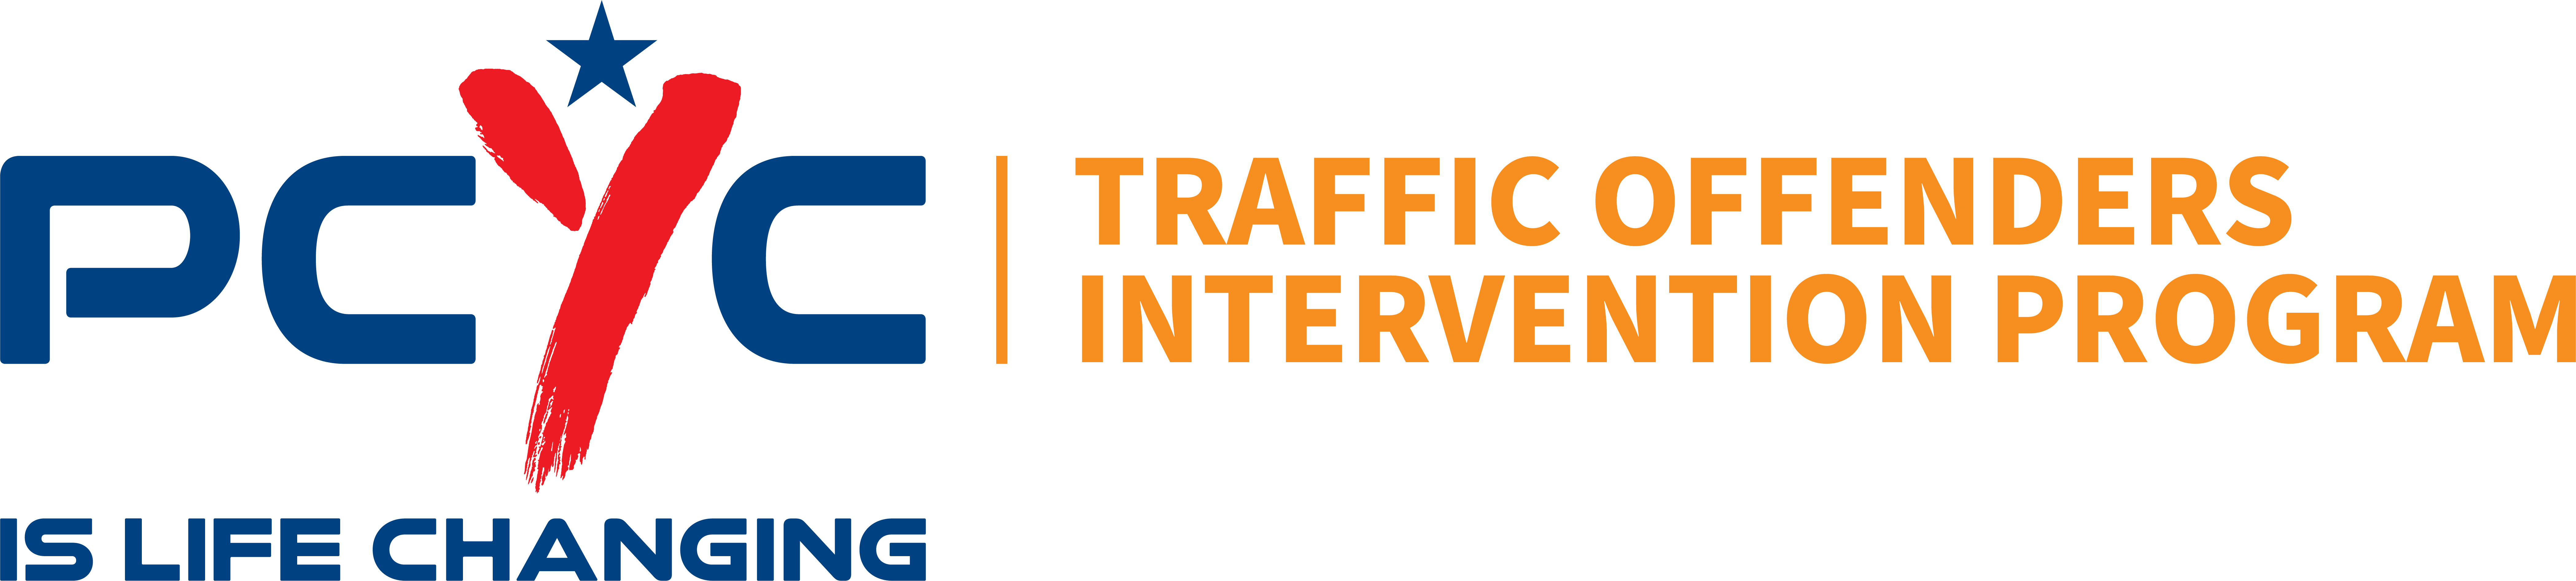 PCYC Traffic Offender Intervention Programs